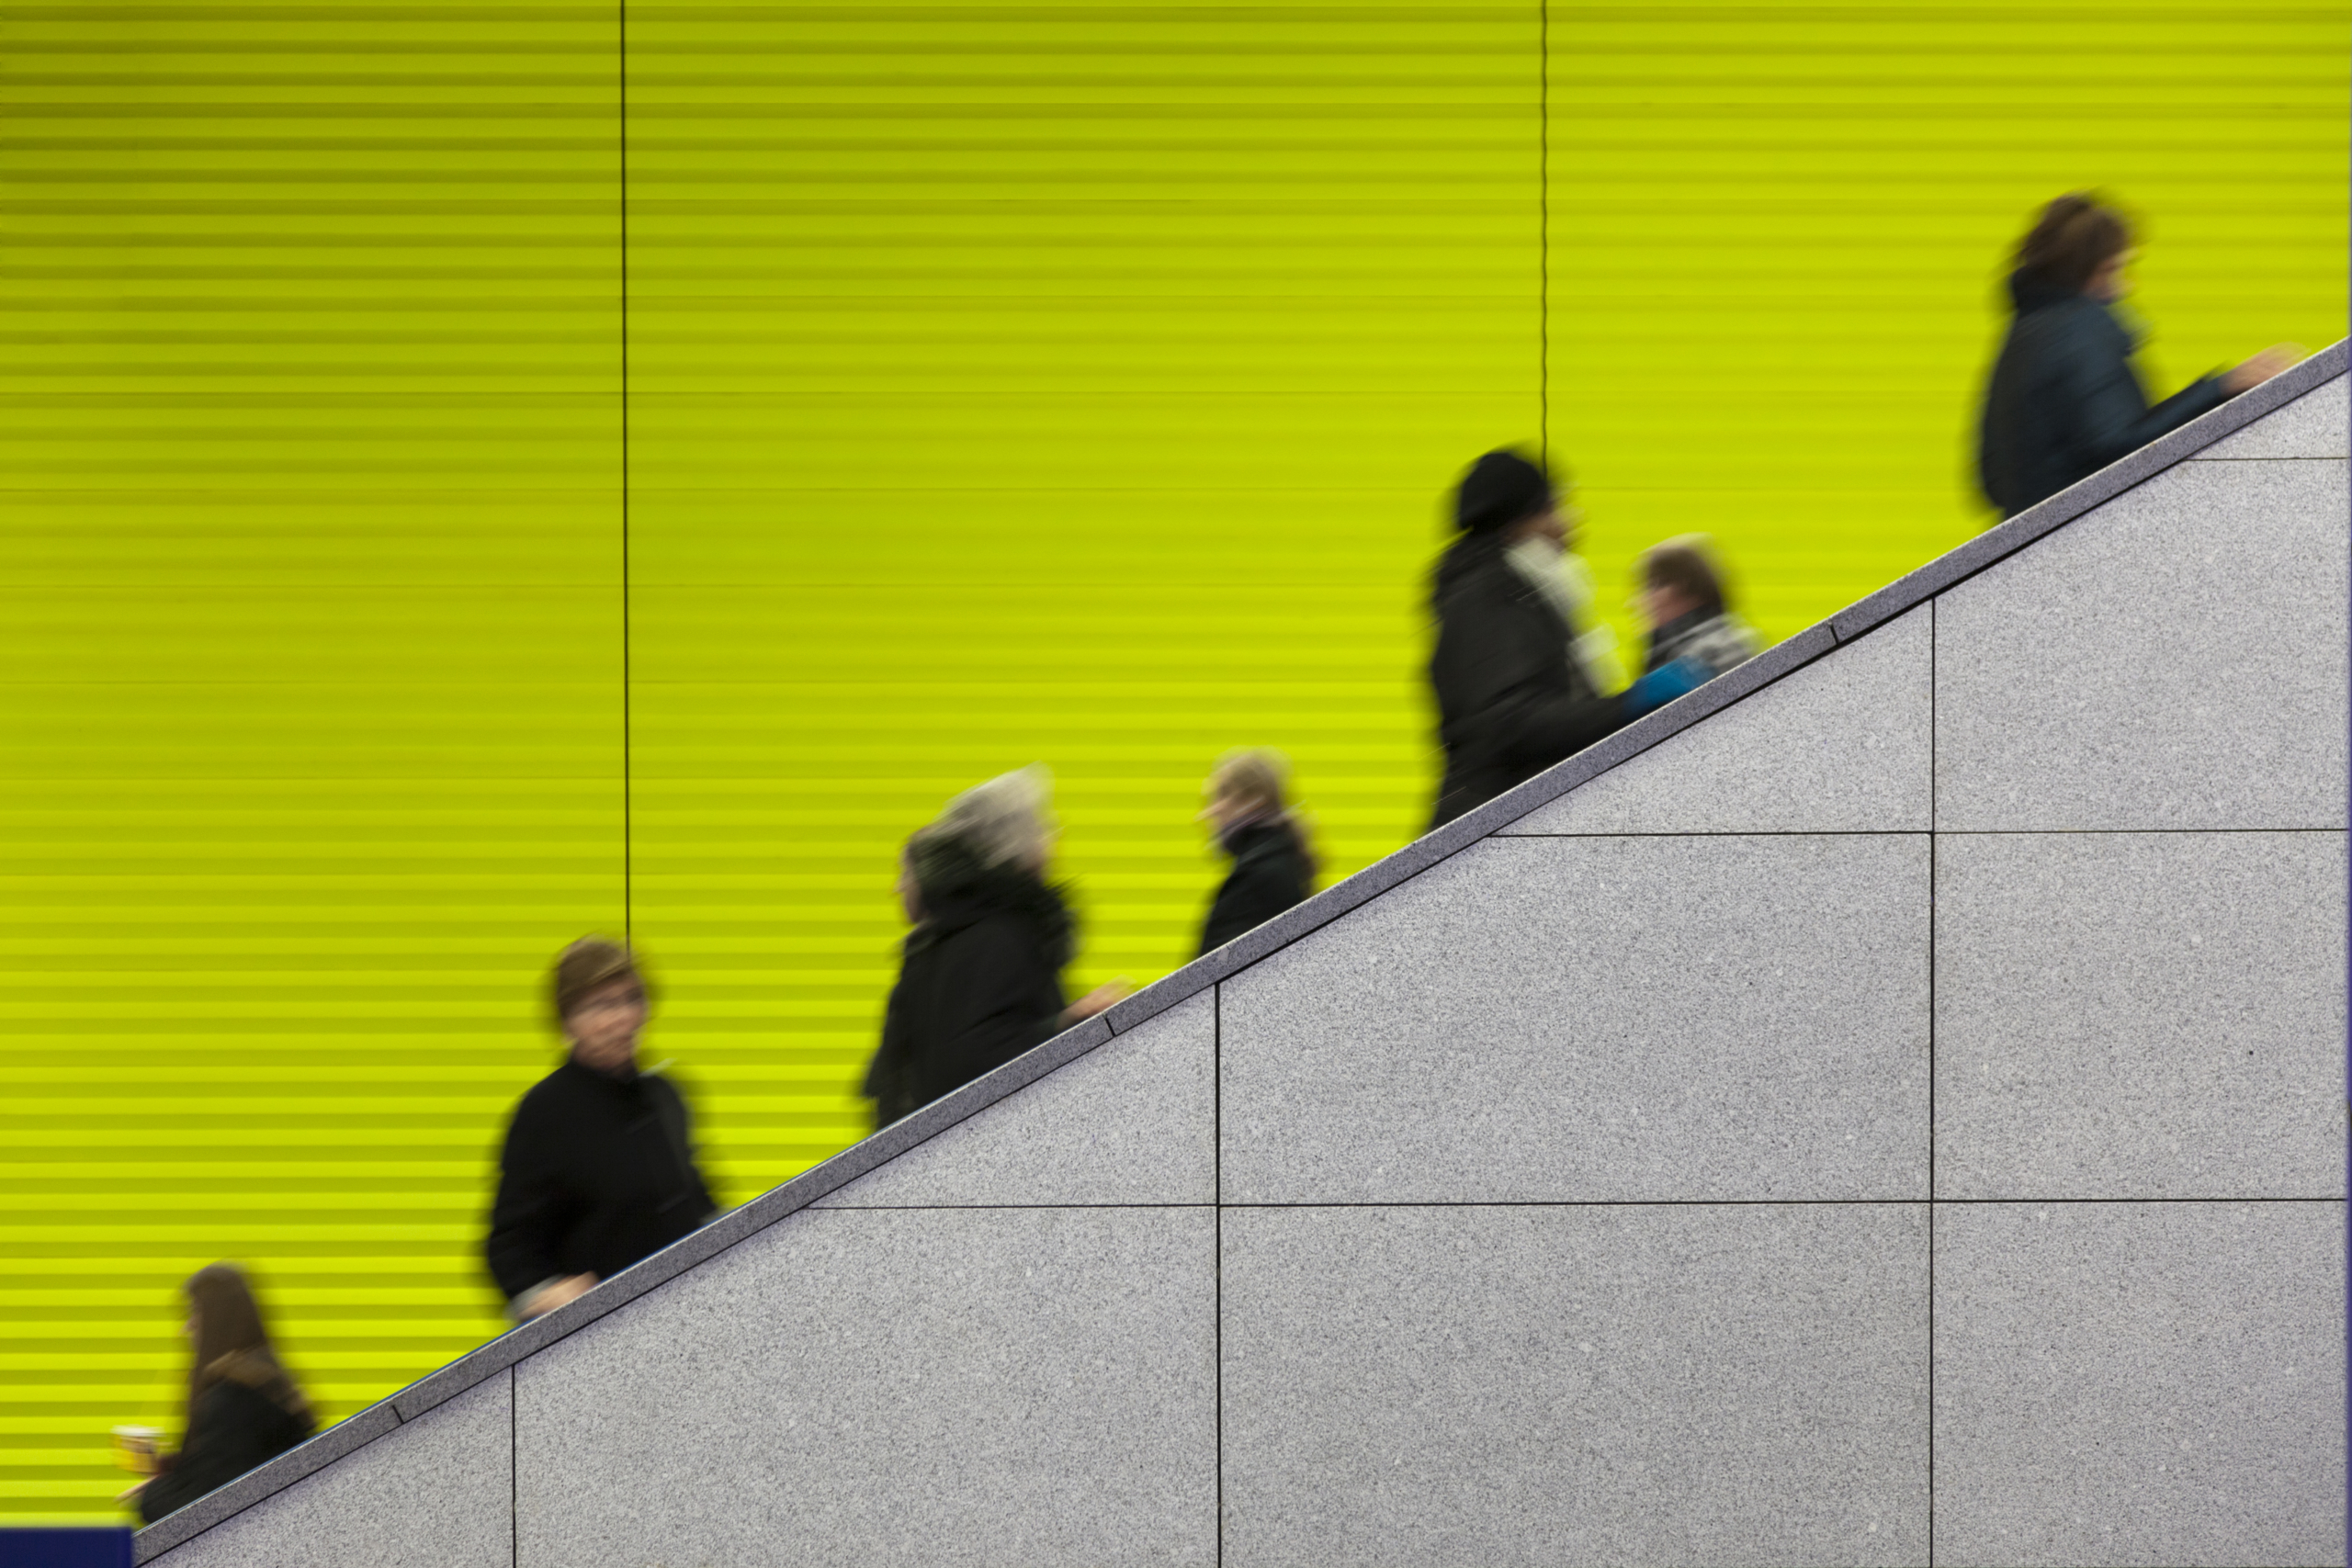 Civilians riding an escalator with a green screen background